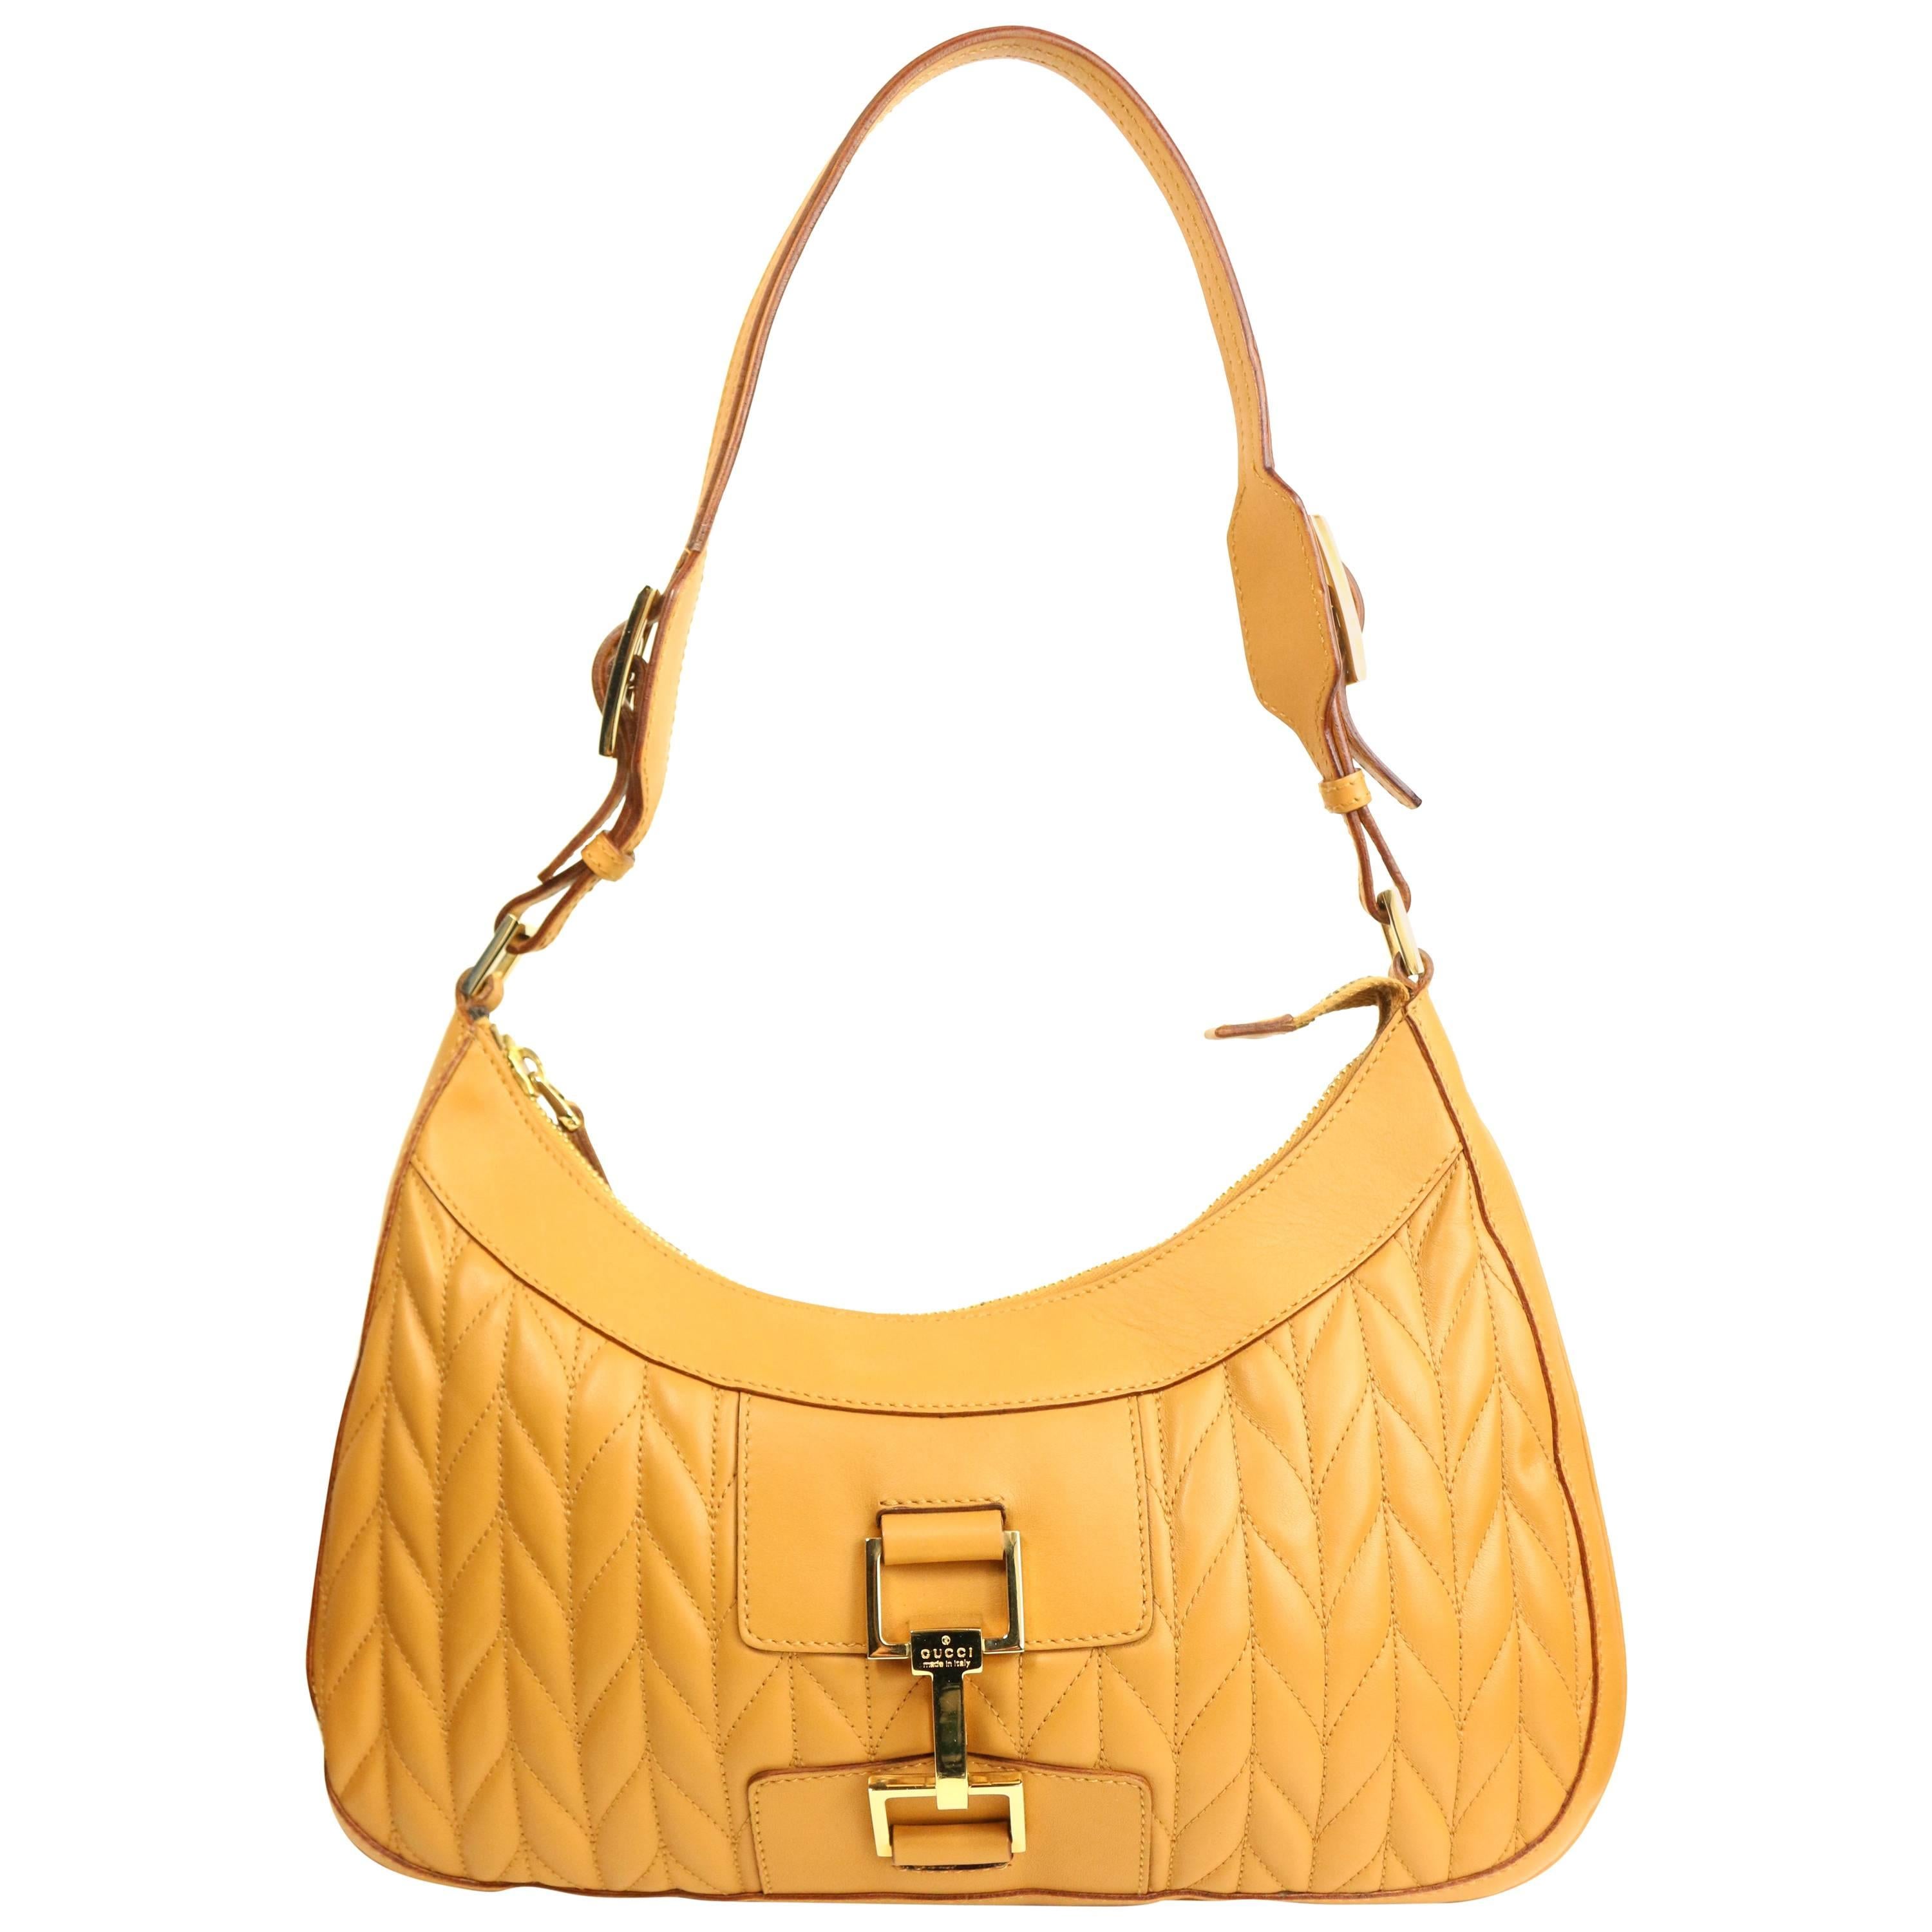 Gucci Camel Lambskin Leather Hobo Handbag